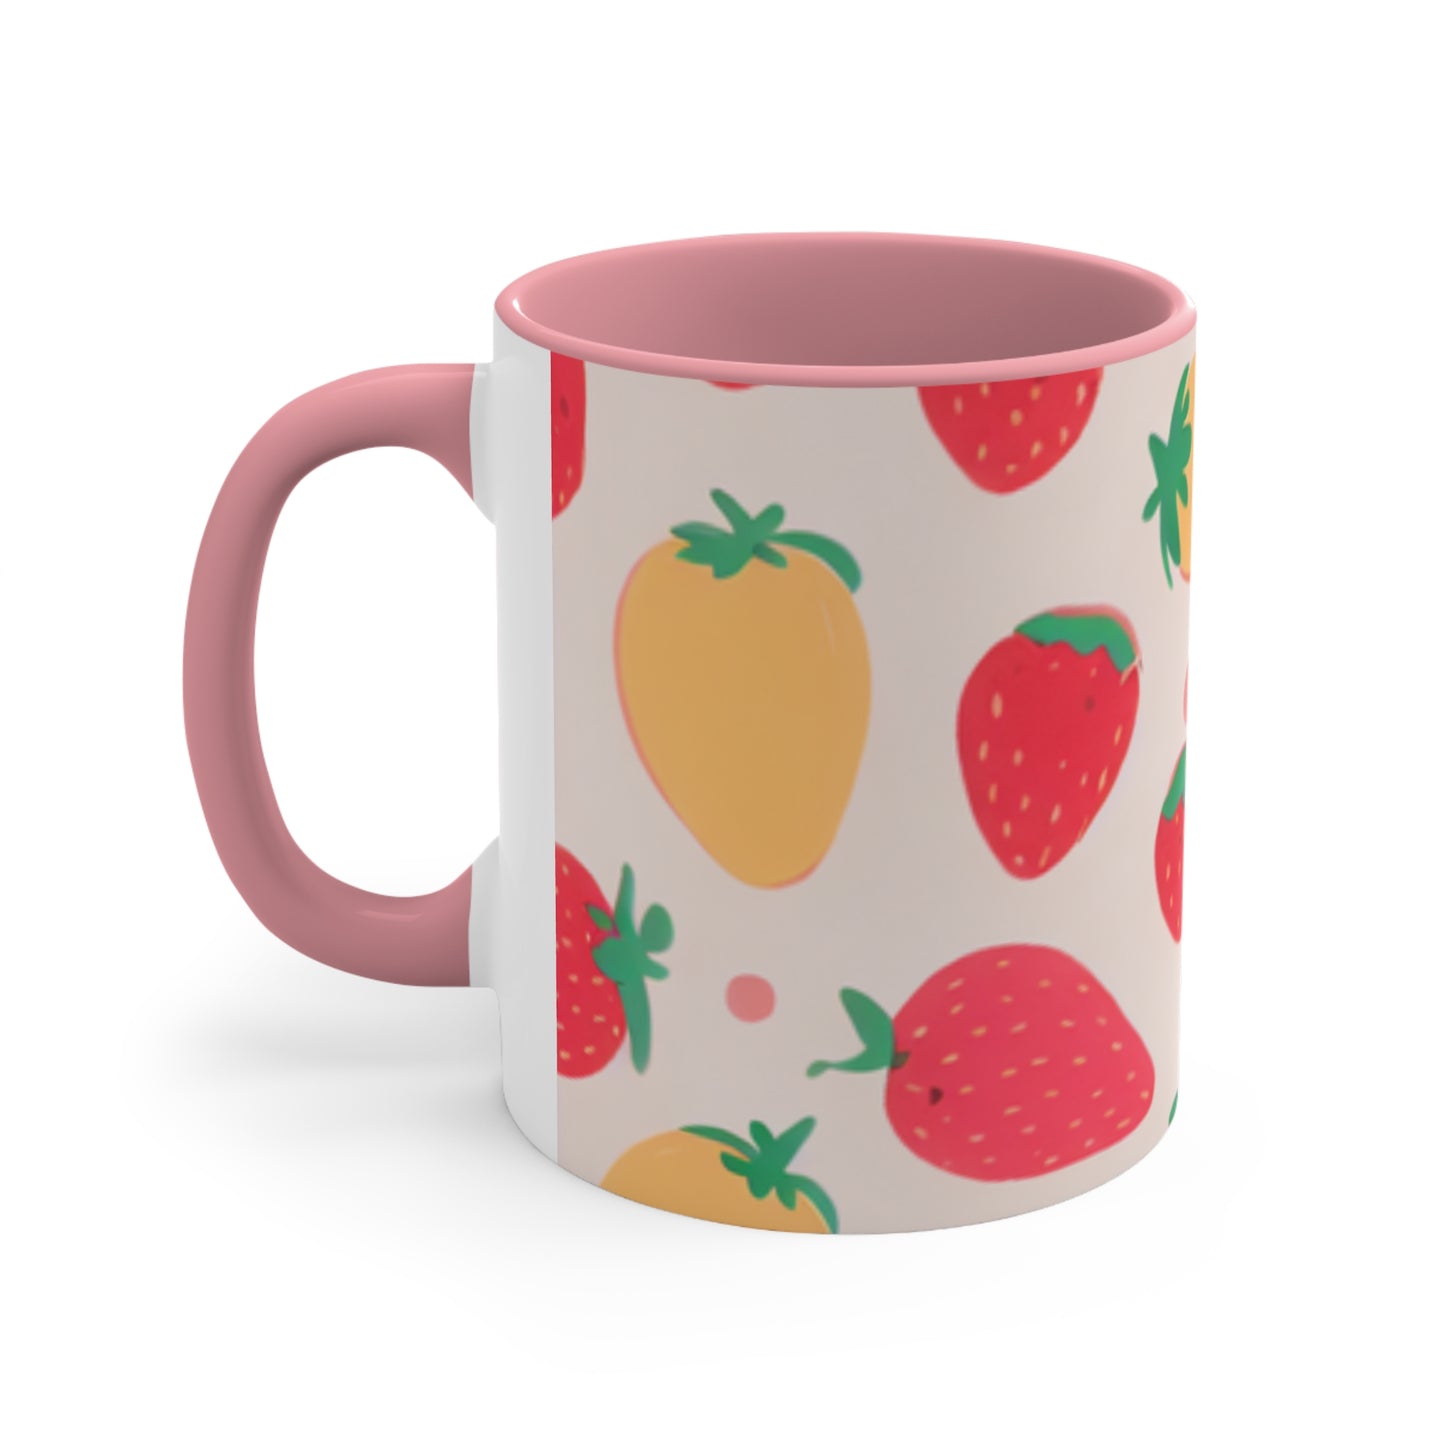 Strawberry and Mango mug